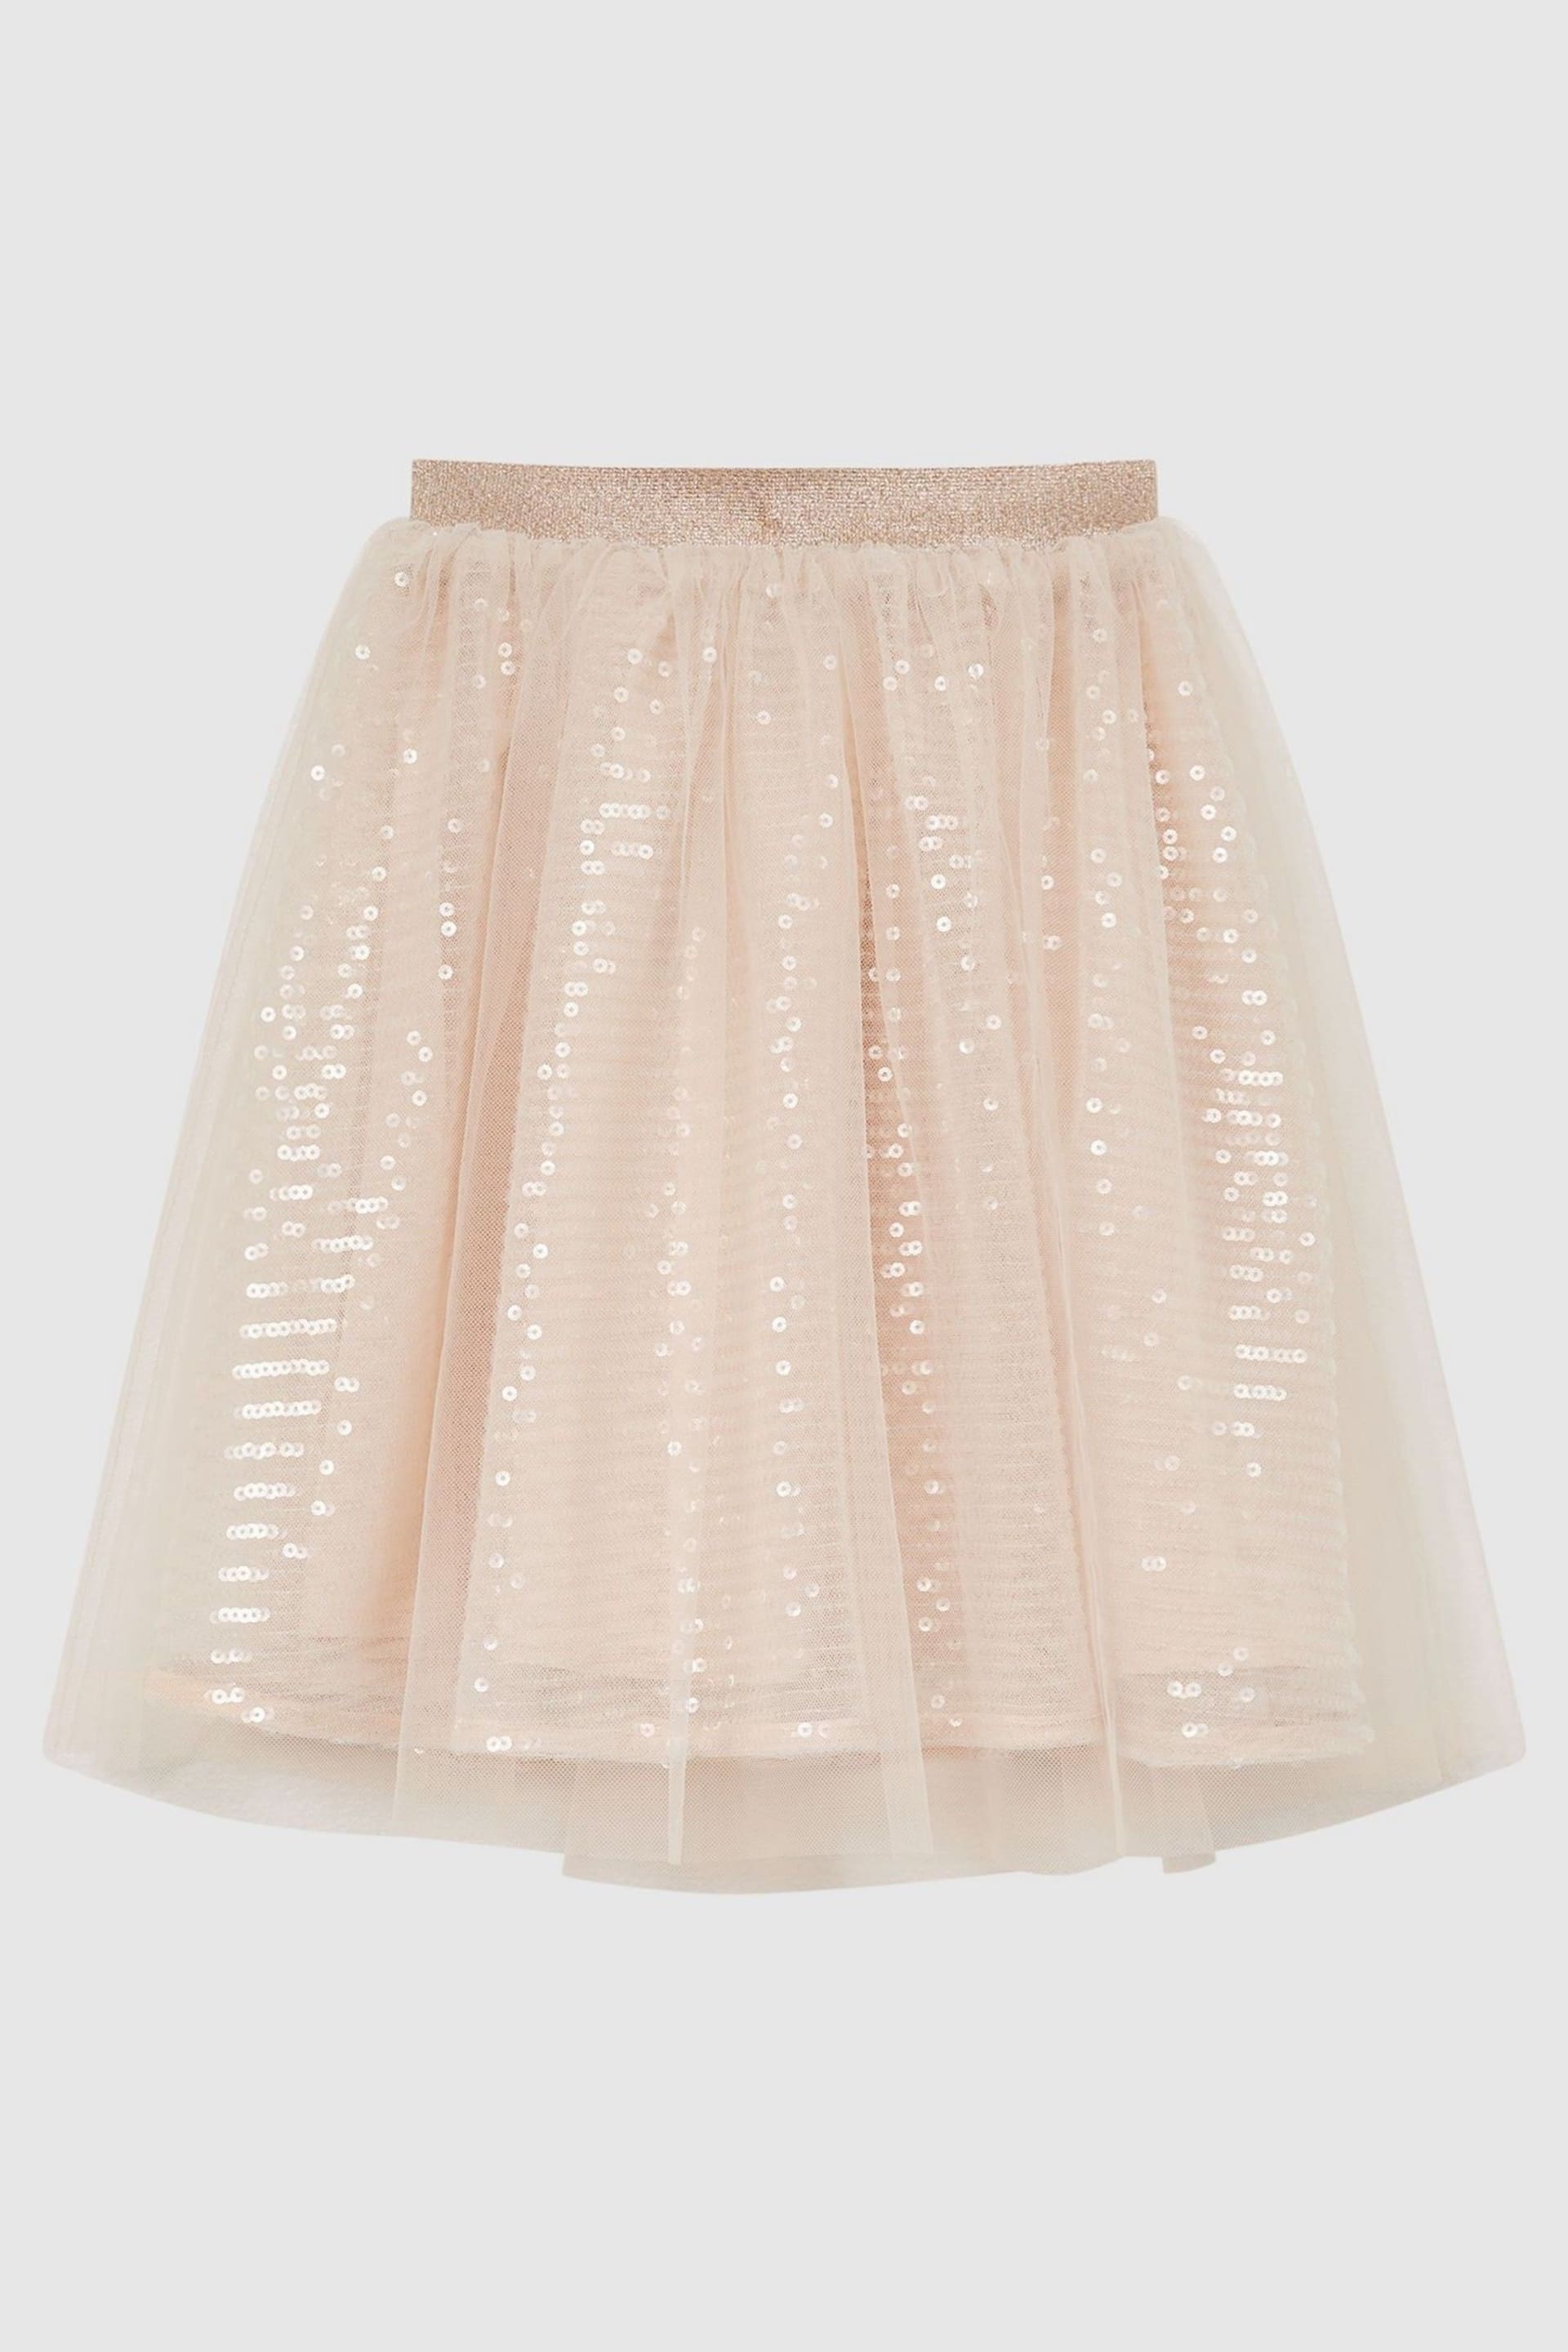 Reiss Pale Pink Charlotta Junior Sequin Midi Skirt - Image 2 of 6